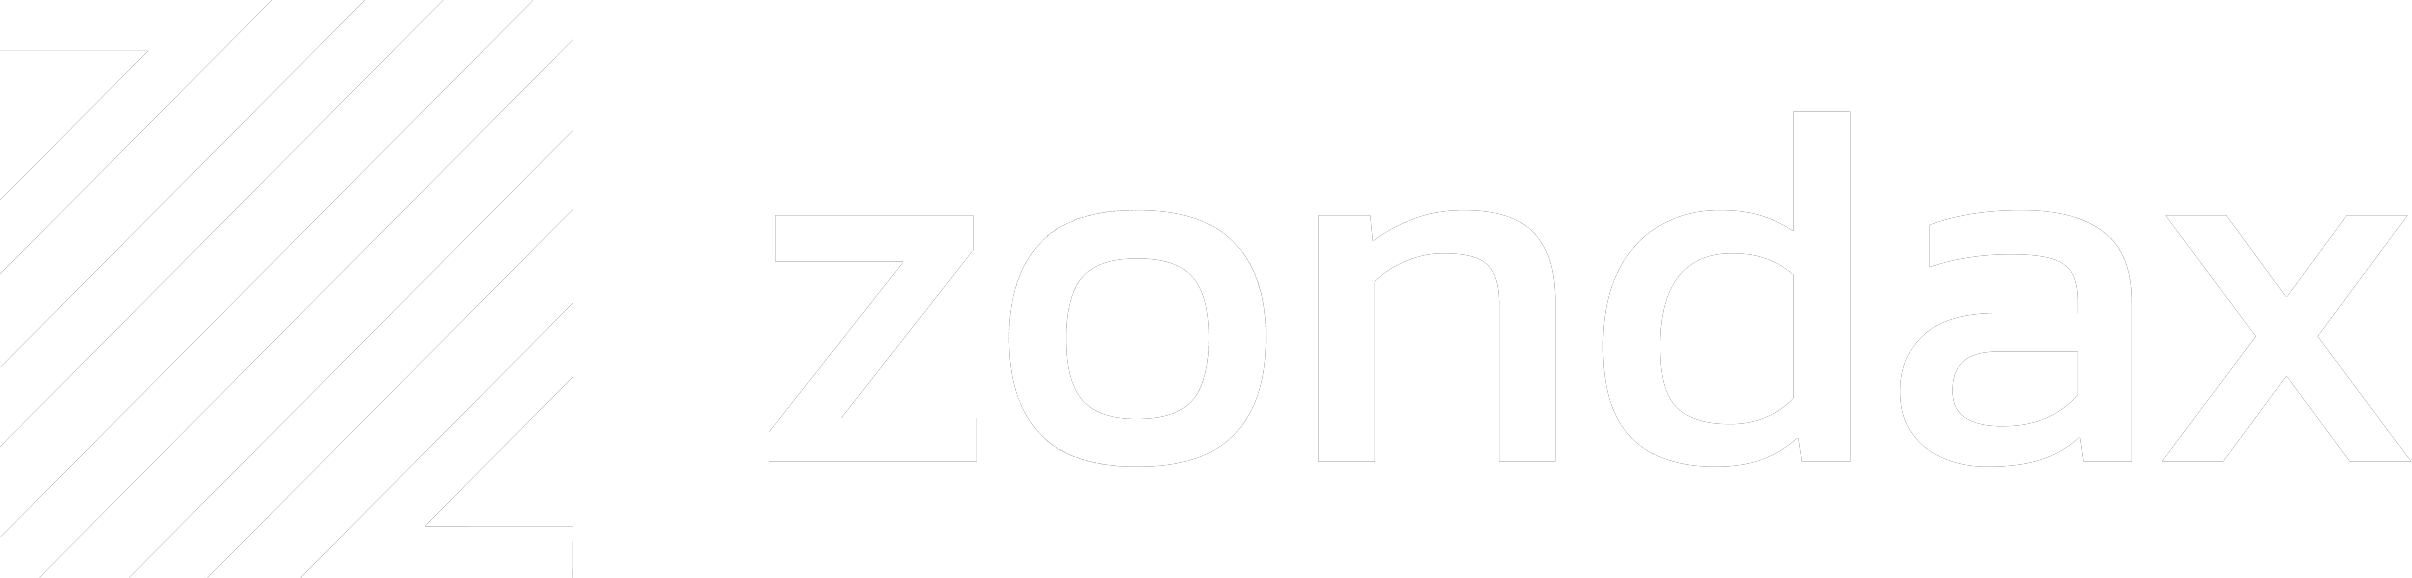 Zondax Logo